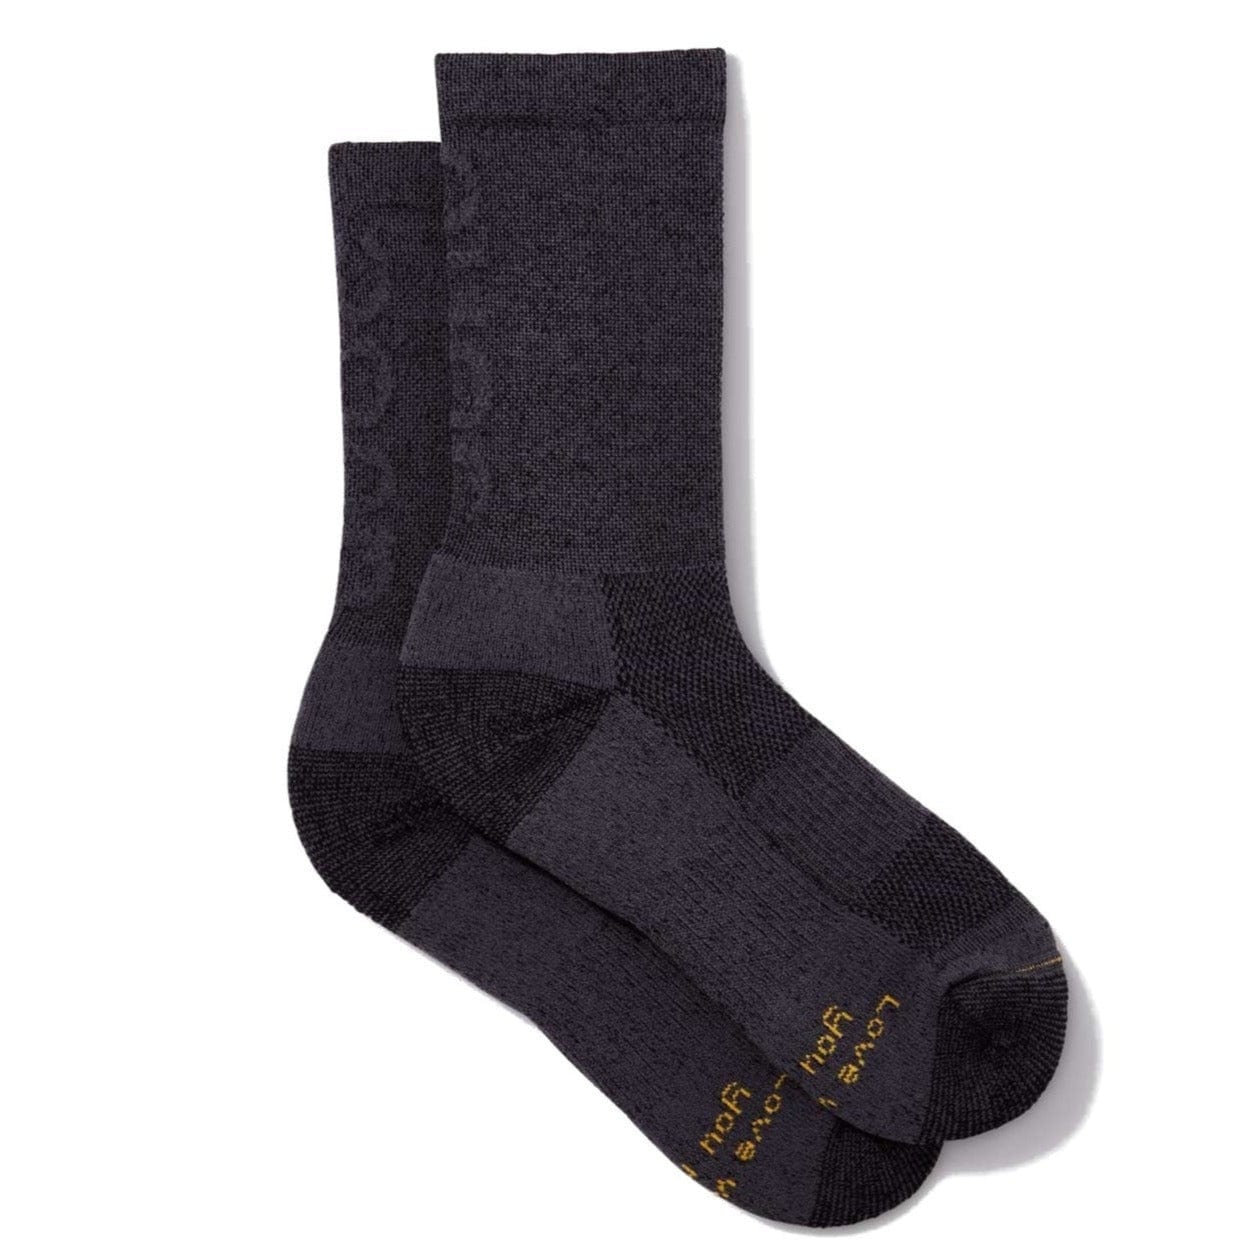 QUOC Merino Tech Wool Socks Charcoal / S Apparel - Clothing - Socks